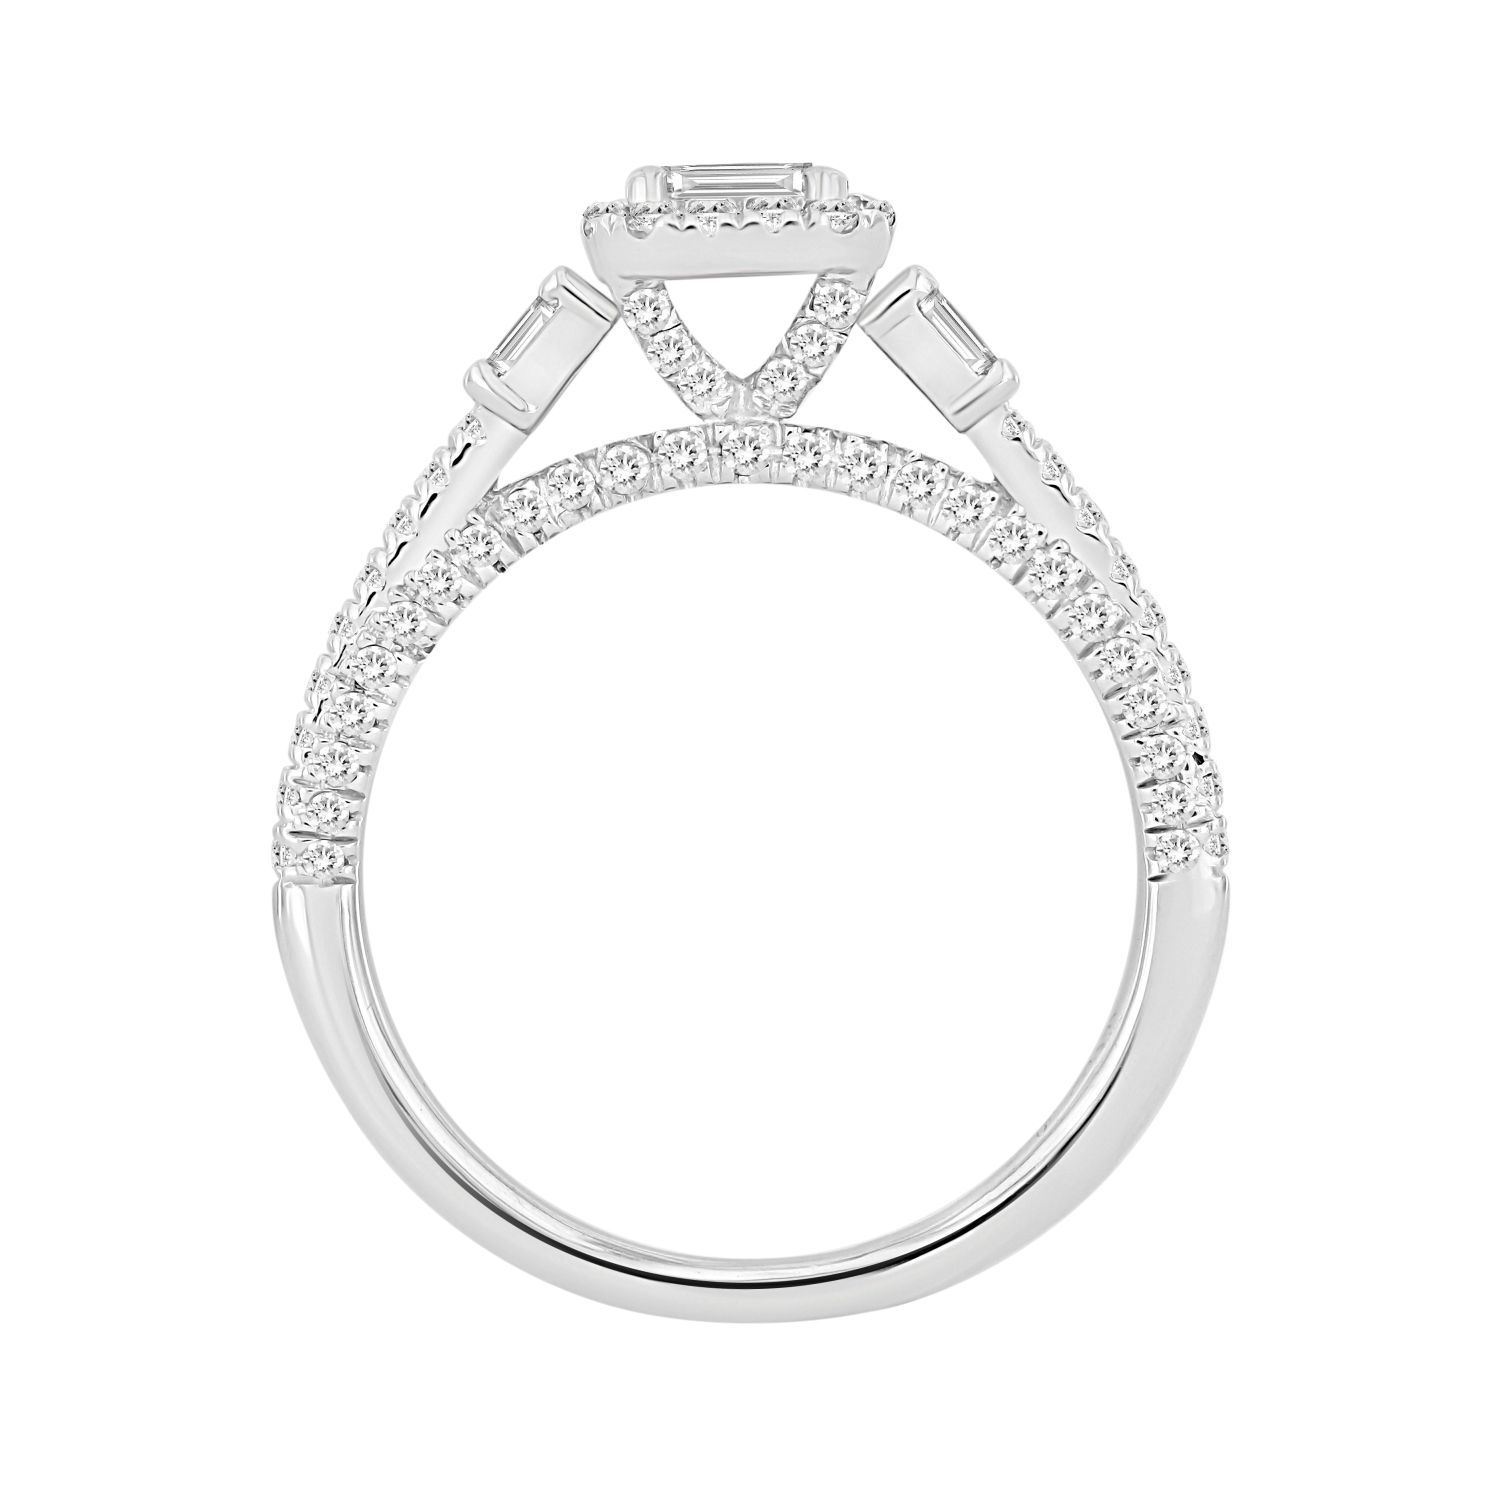 0019210 ladies ring 1 13 ct roundbaguetteemerald diamond 14k white gold center 34 si quality